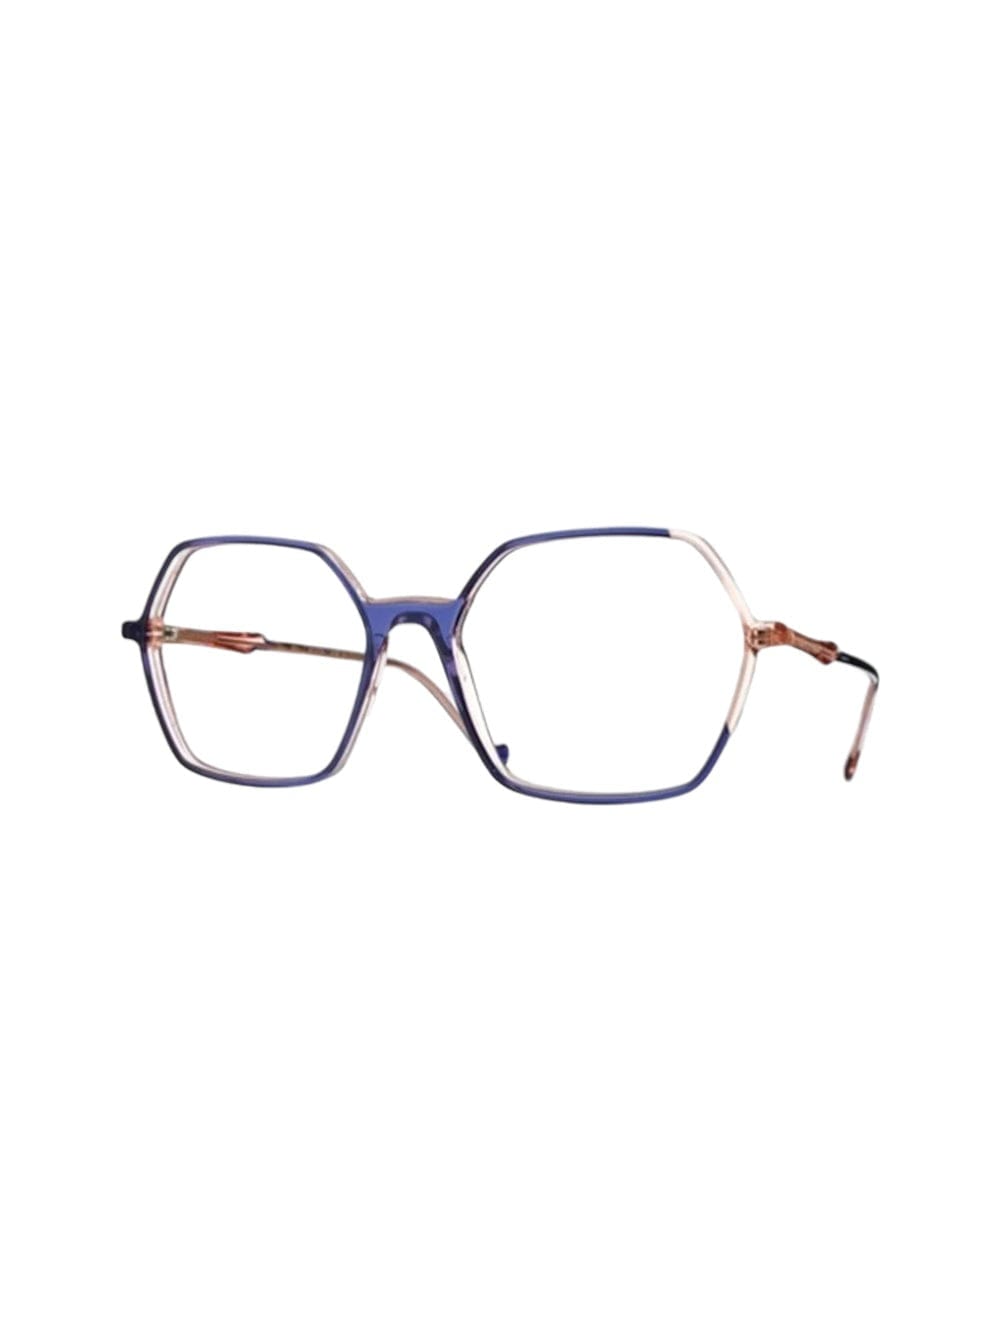 Charlotte - Blue Glasses